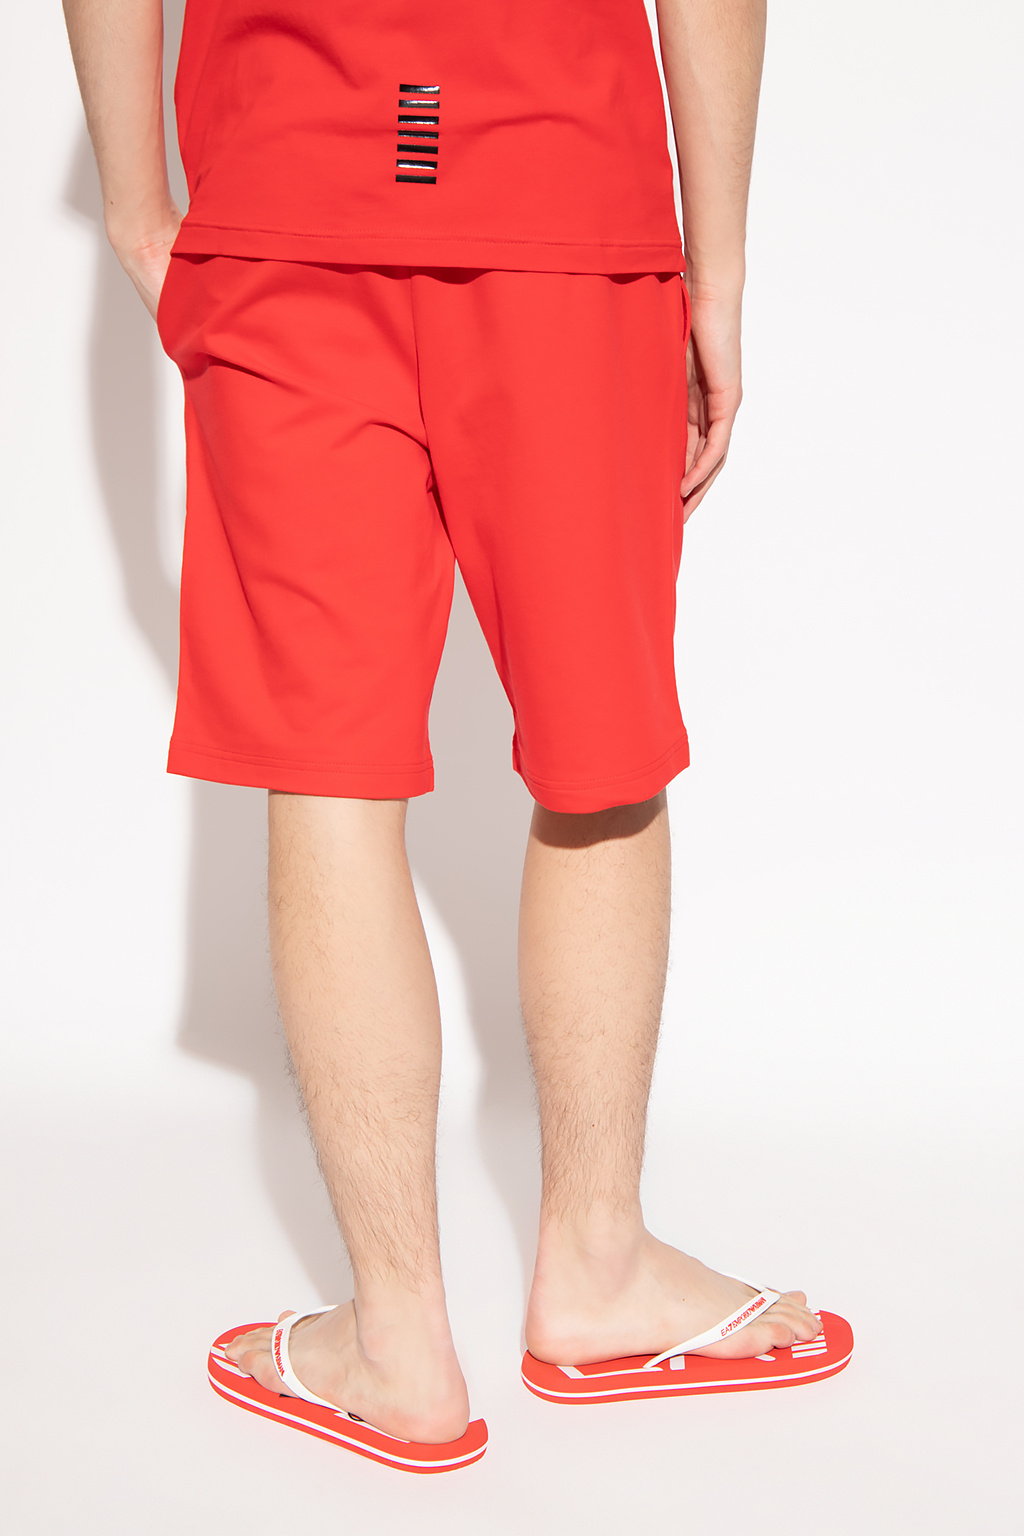 Red Shorts with logo EA7 Emporio Armani - Vitkac Norway